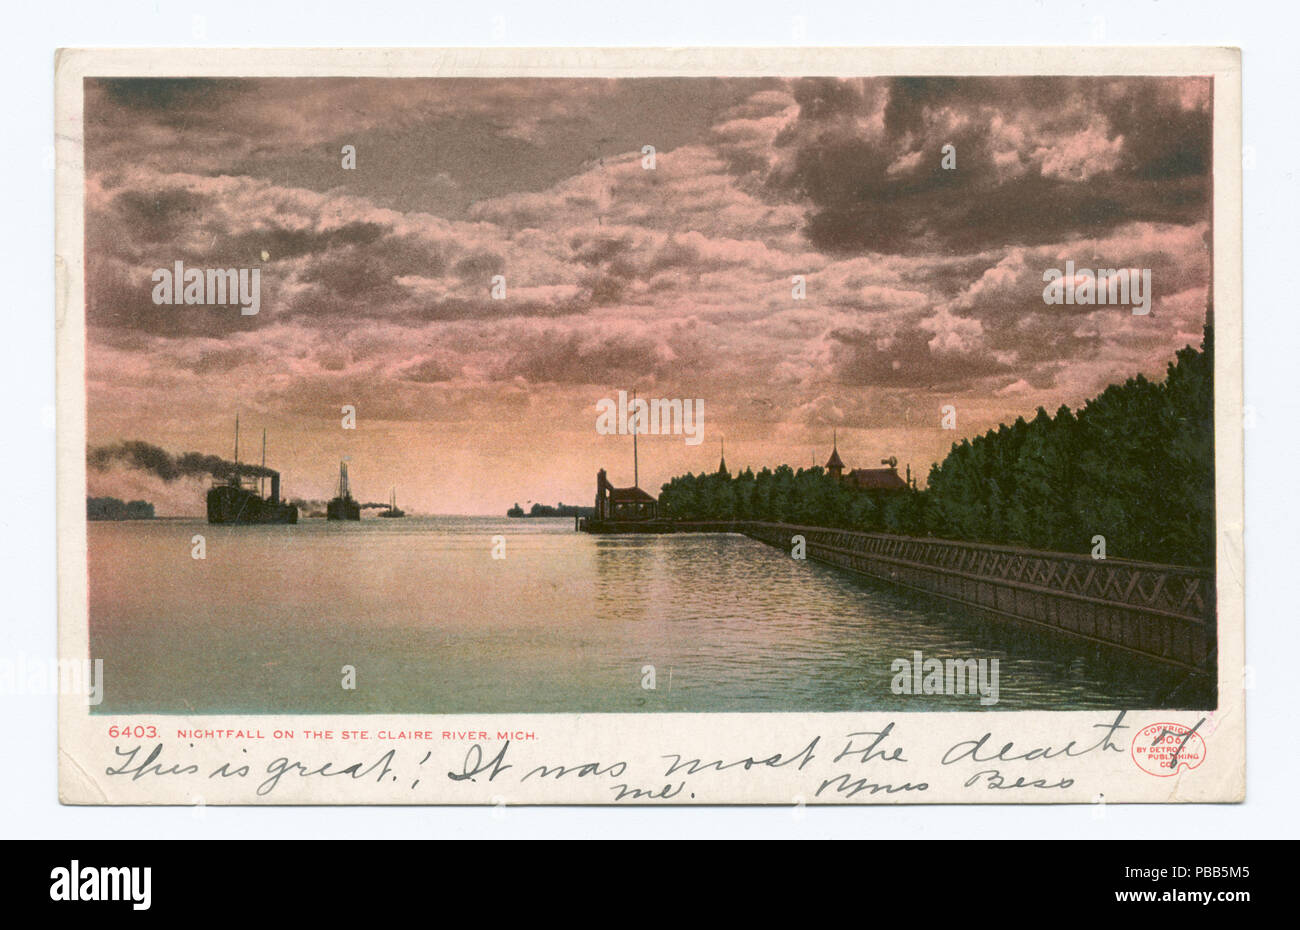 Steamer, City of Toledo Postcard. ca. 1904, Steamer